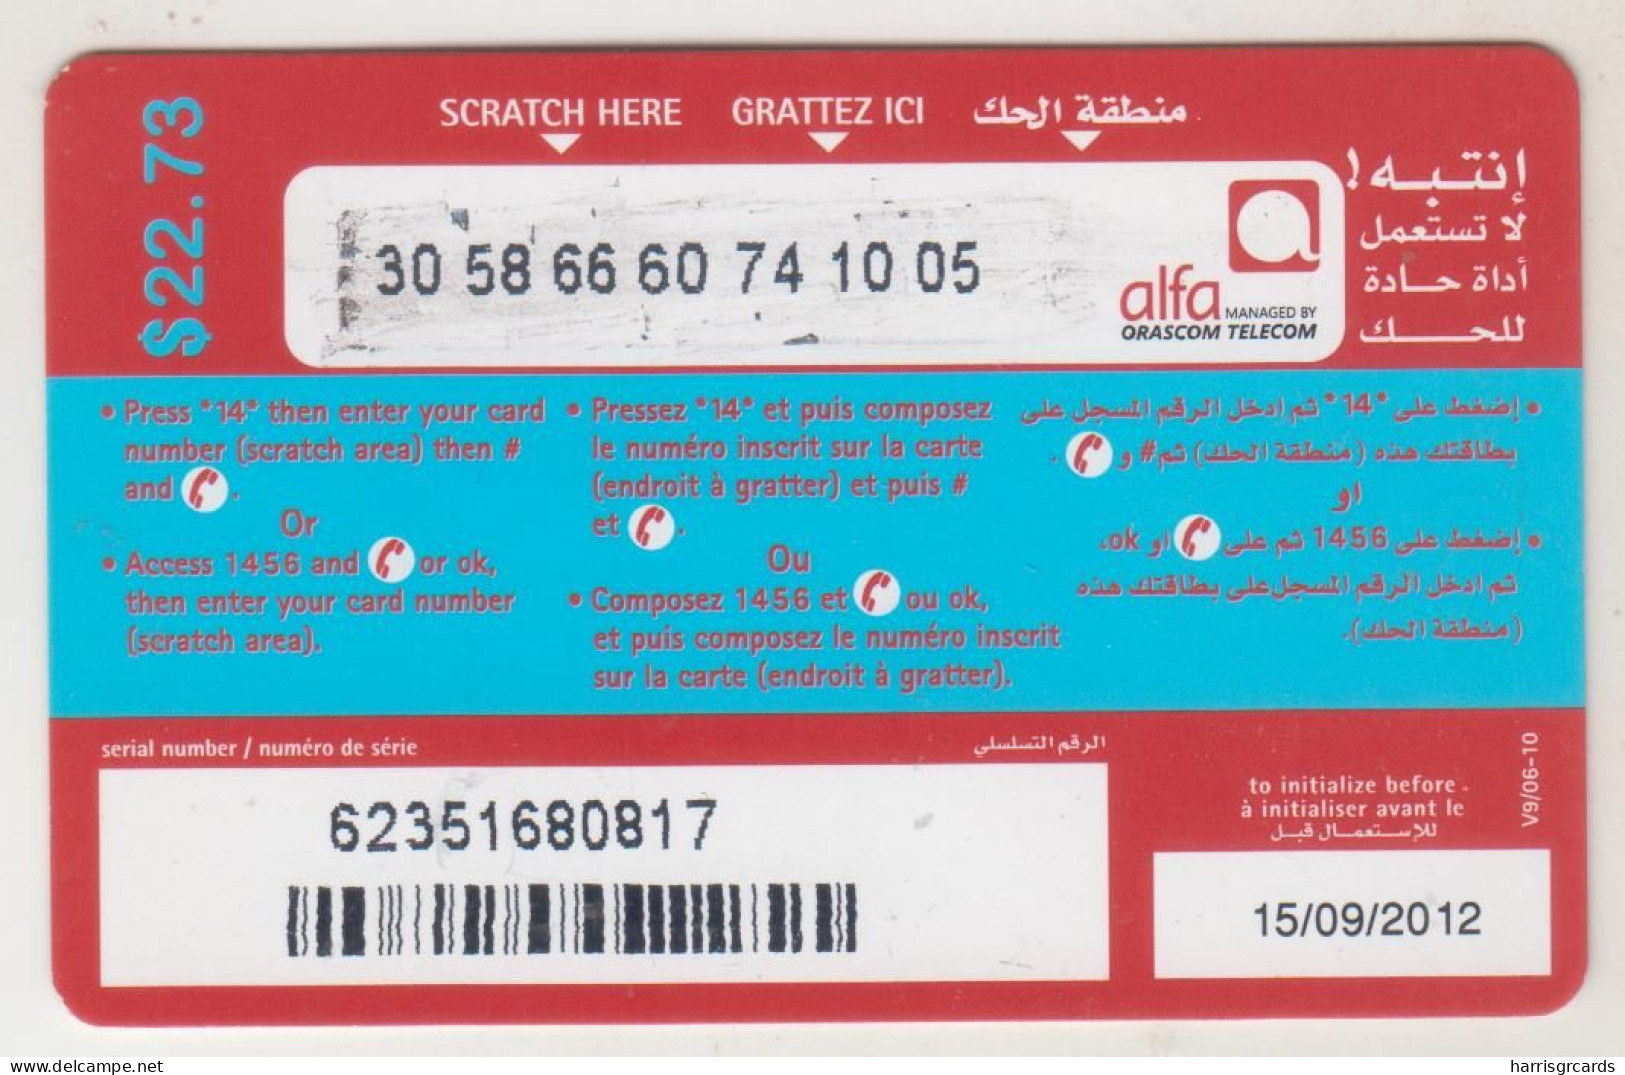 LEBANON - Jbeil Sea View , Alfa Recharge Card 22.73$, Exp.date 15/09/12, Used - Lebanon